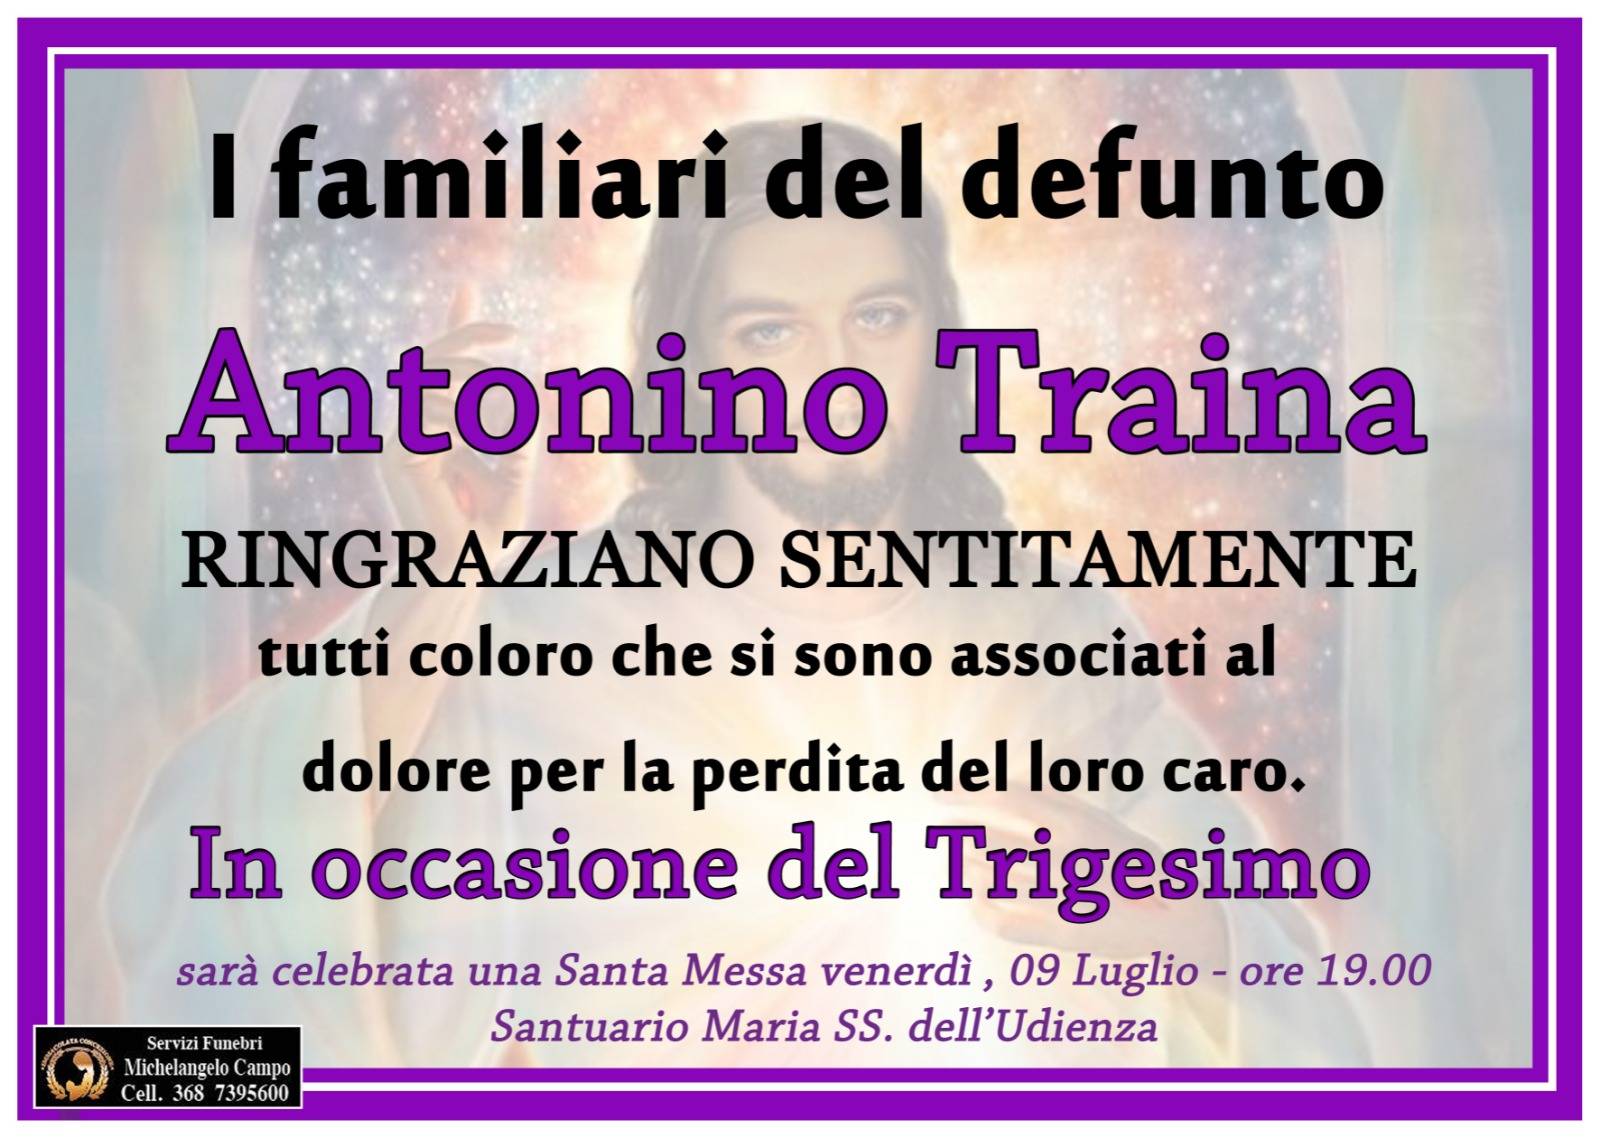 Antonino Traina